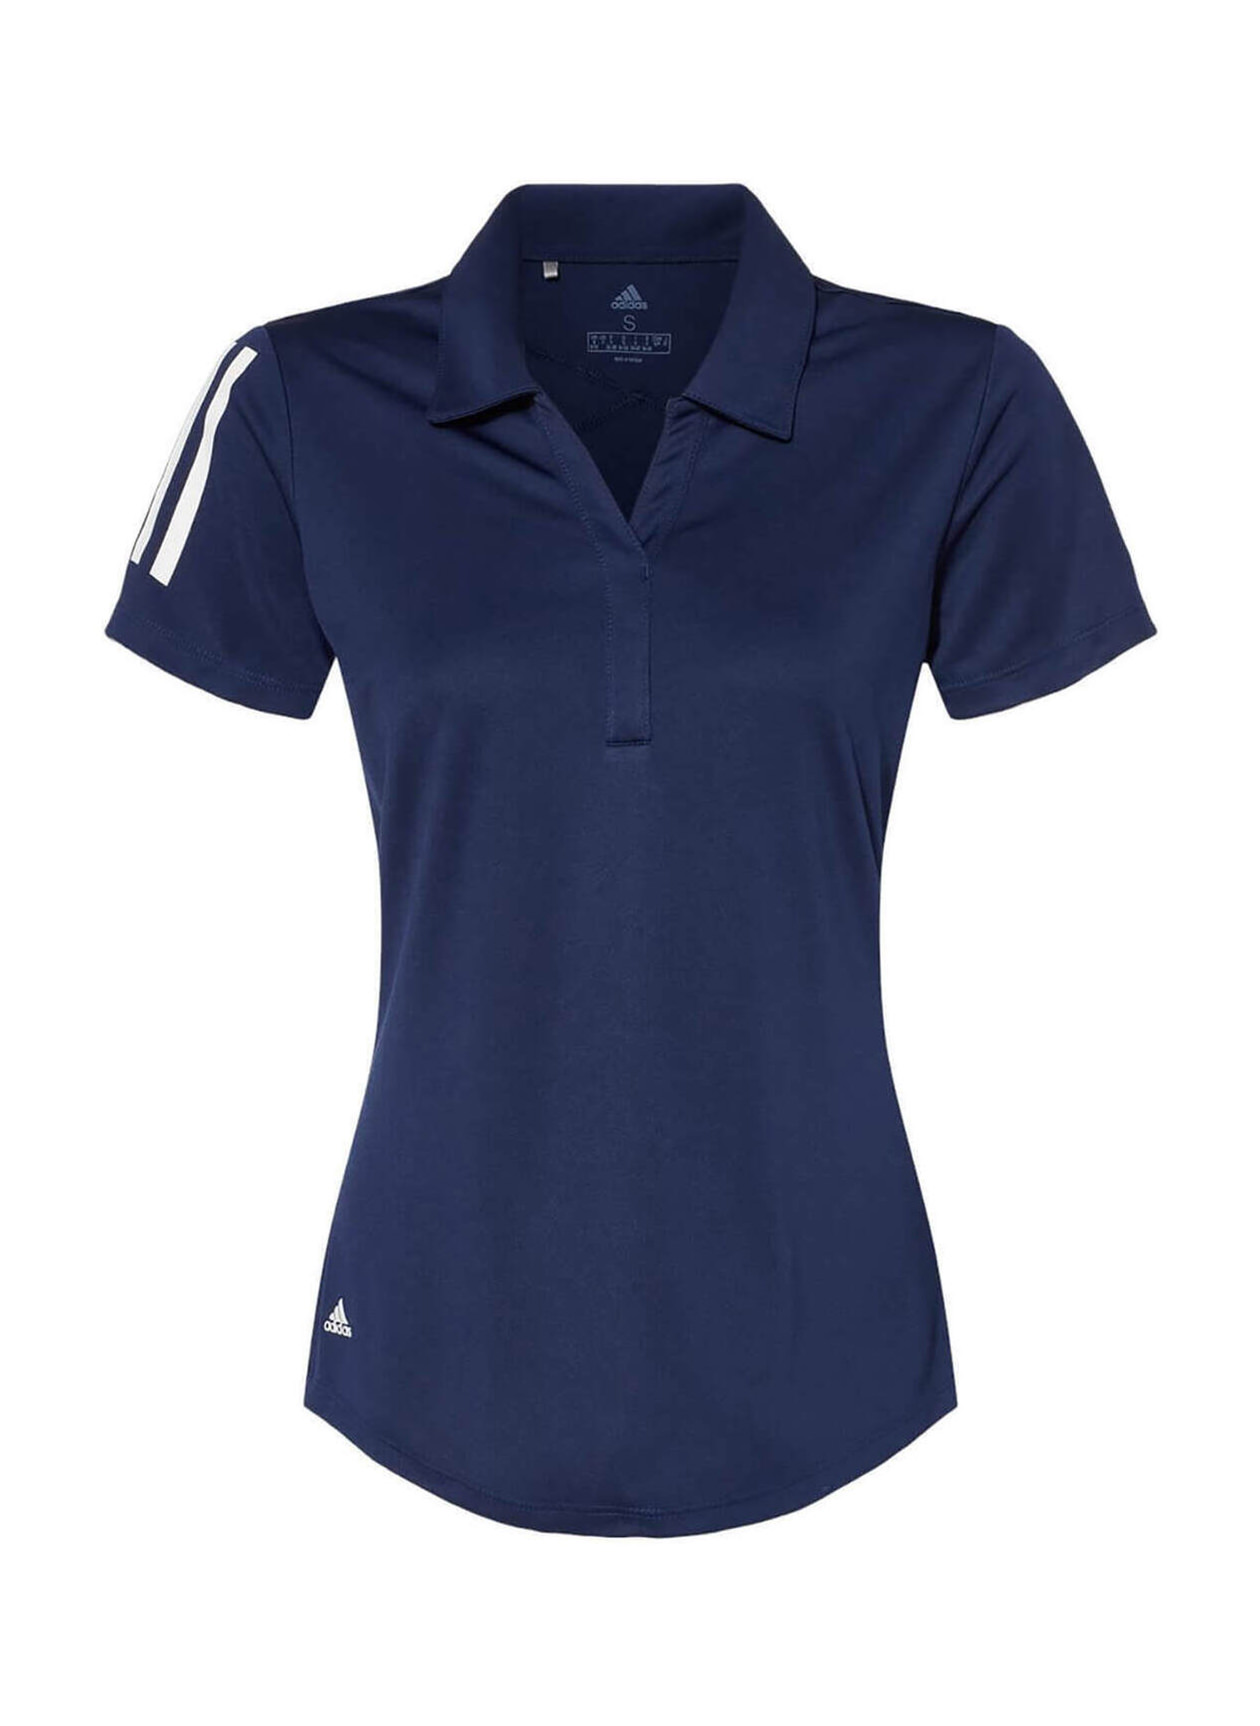 Adidas Women's Team Navy Floating 3-Stripes Polo | Custom Polo Shirts